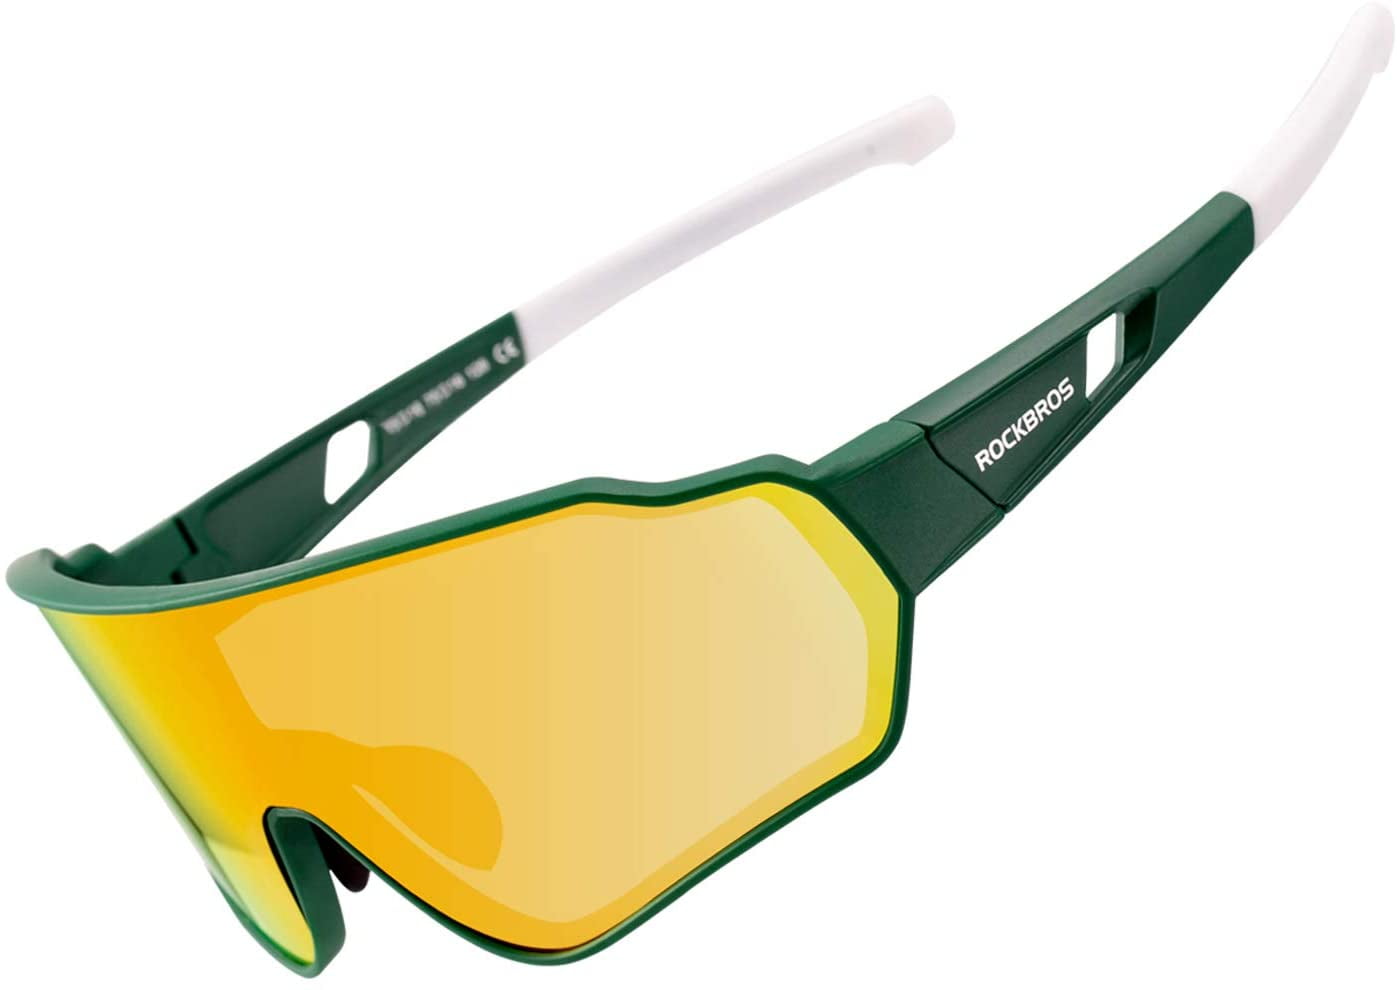 ROCKBROS Photochromic Rimless Sunglasses Eyewear UV400 Goggles Blue Green 